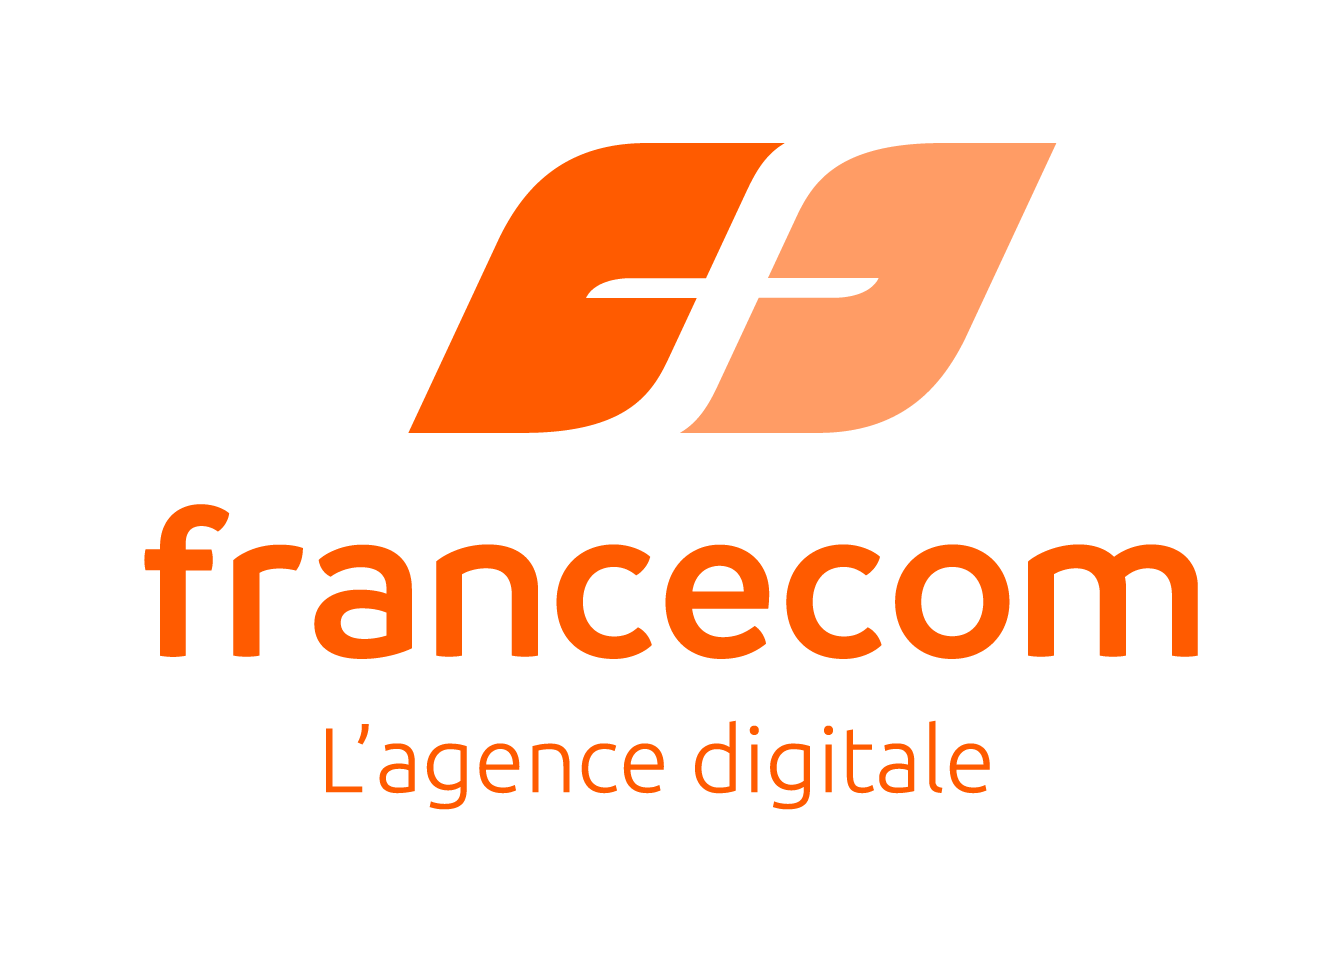 Visit Francecom